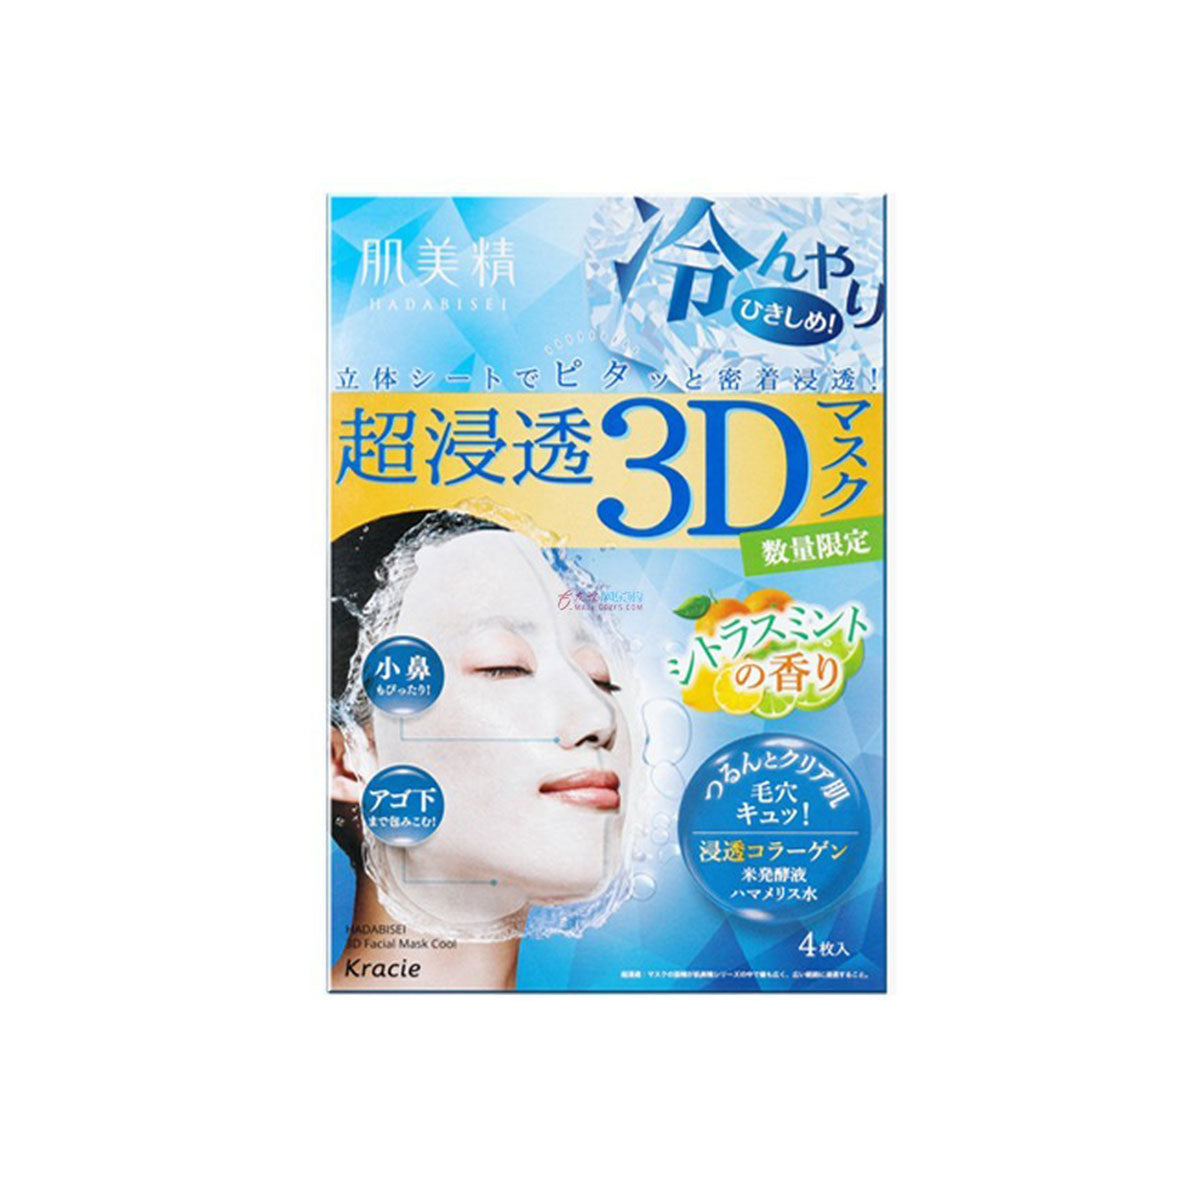 Hadabisei 3D Facial Mask Cool  Limited 4pcs